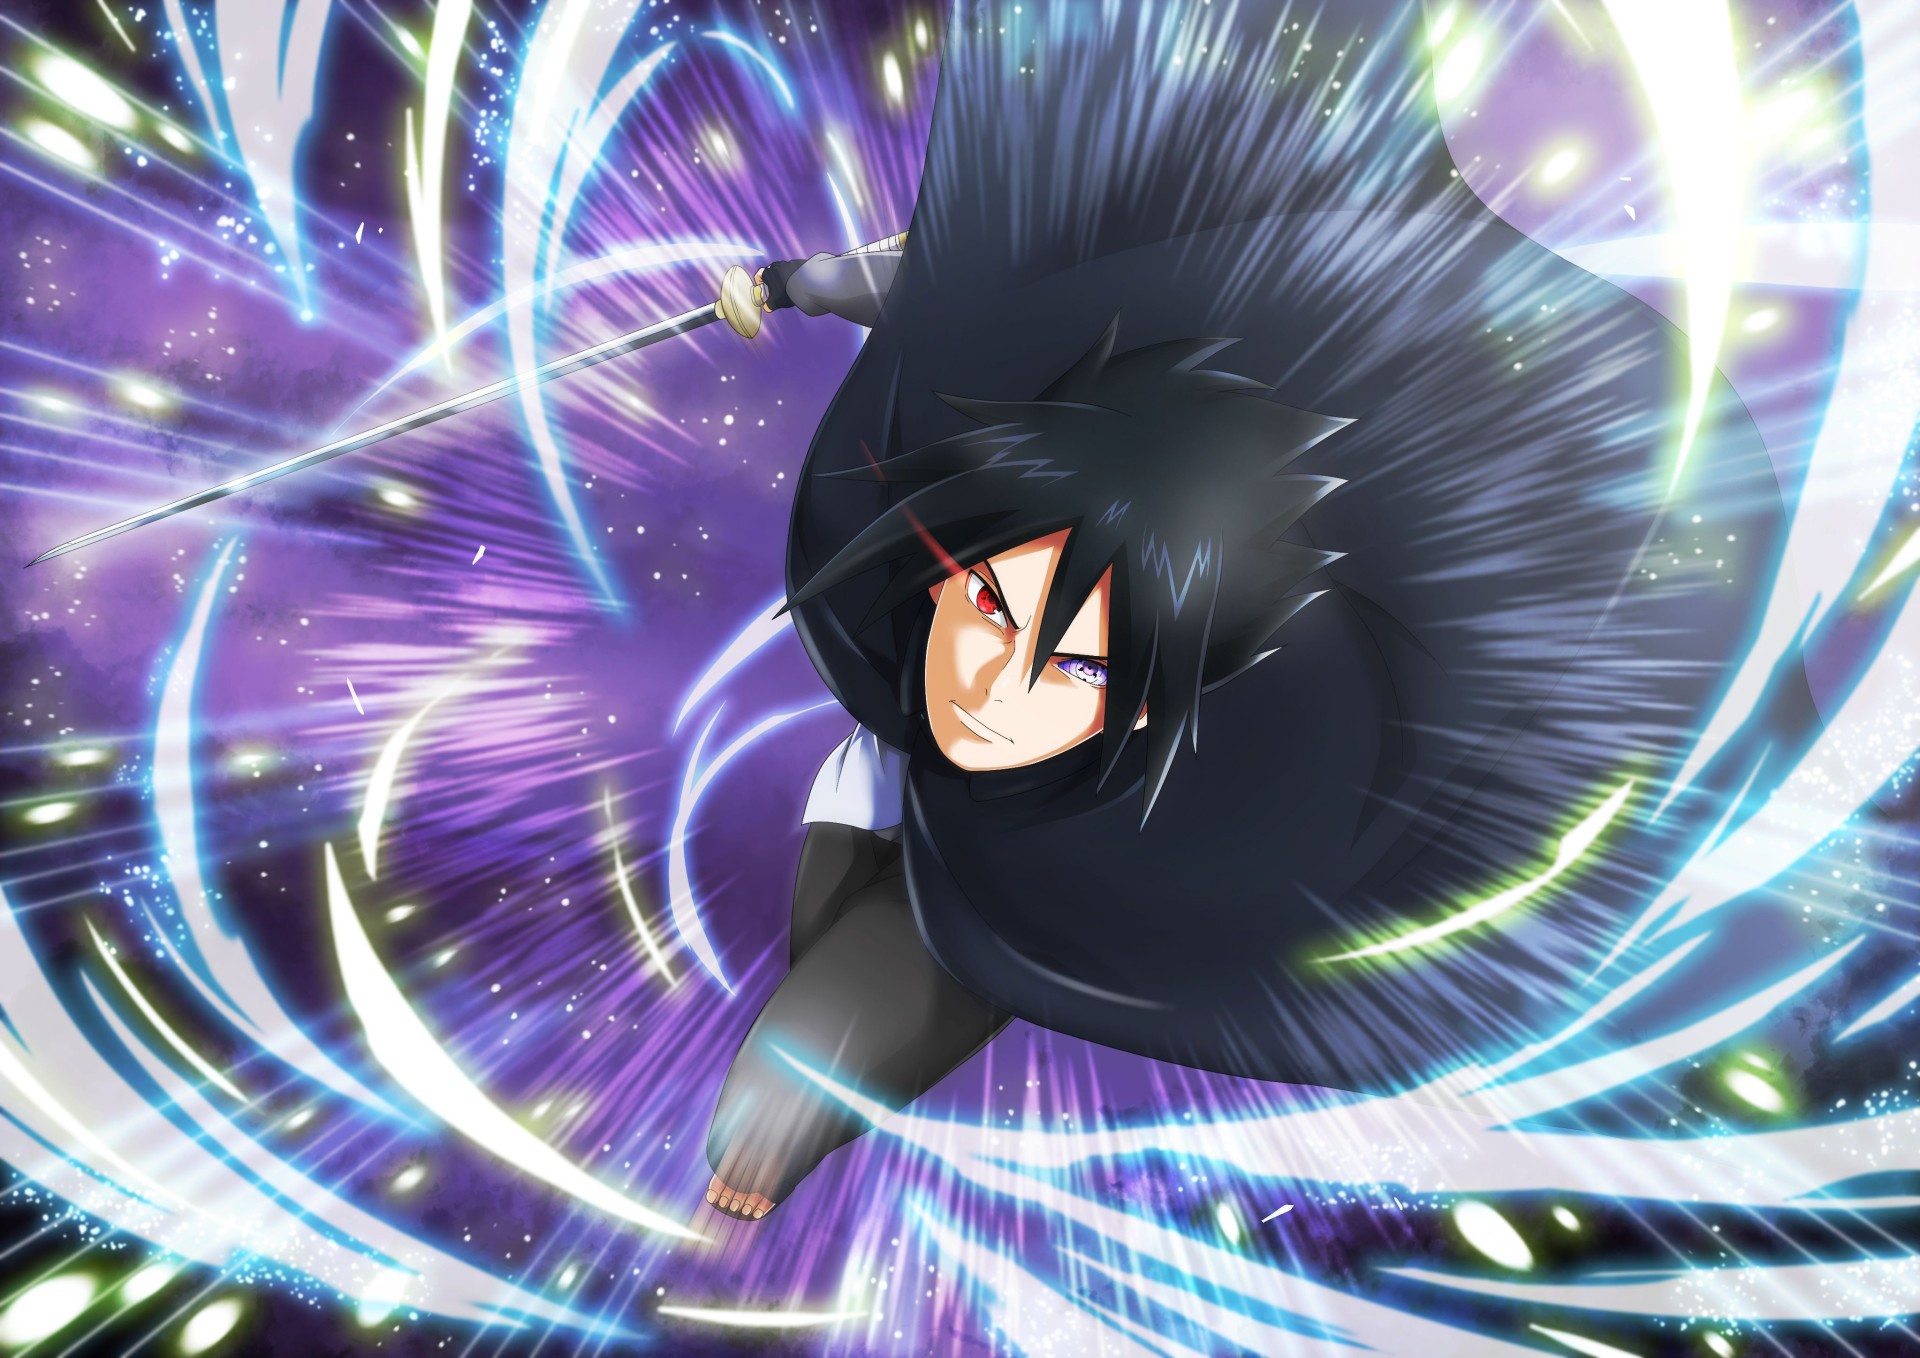 20th Anniversary Sasuke in Naruto x Boruto Ninja Voltage Can Use Kirin